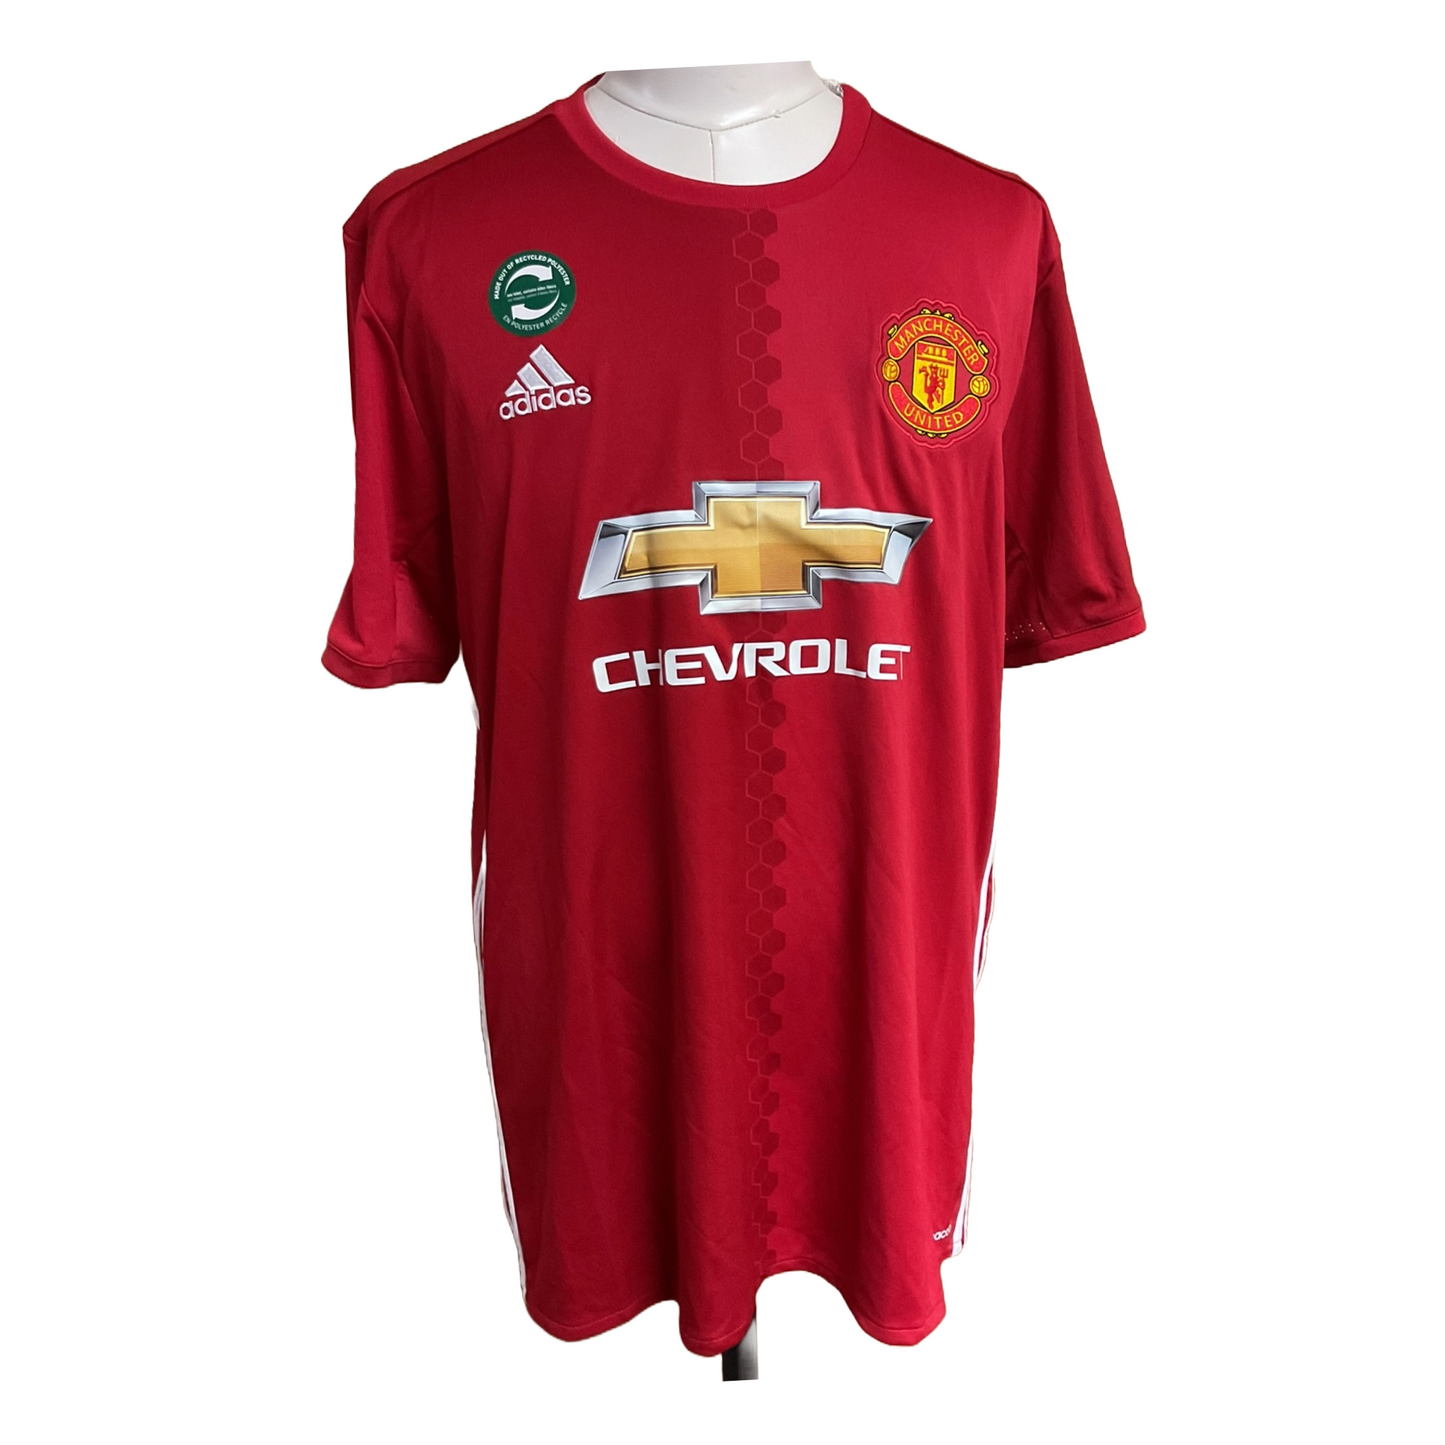 Adidas Climacool Manchester United Camiseta de fútbol para hombre (XL) - Ibrahimovic 9